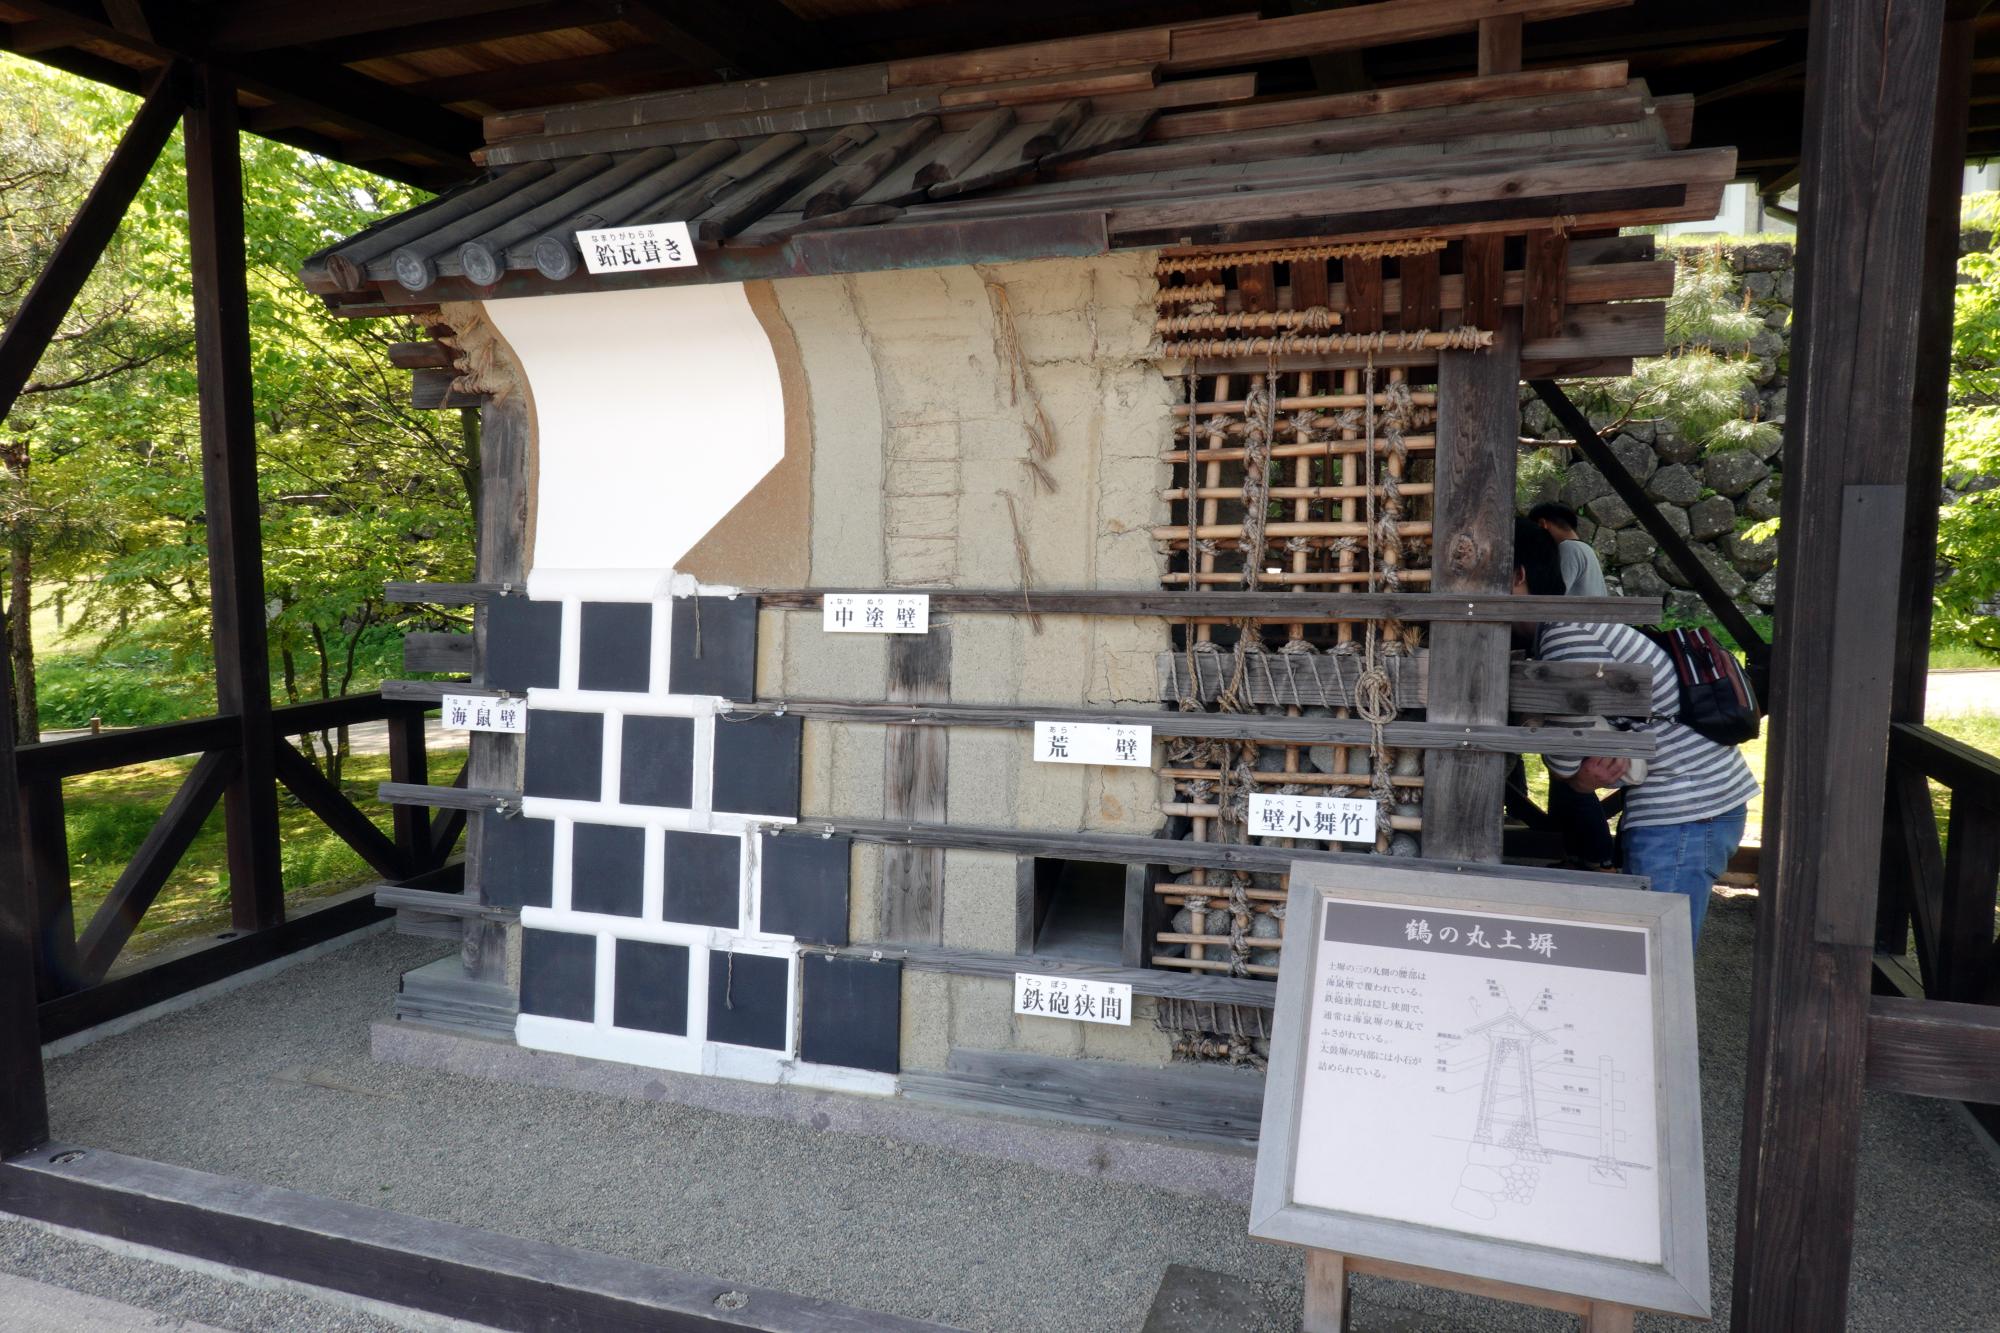 Japan (2019) - Kanazawa Castle Materials